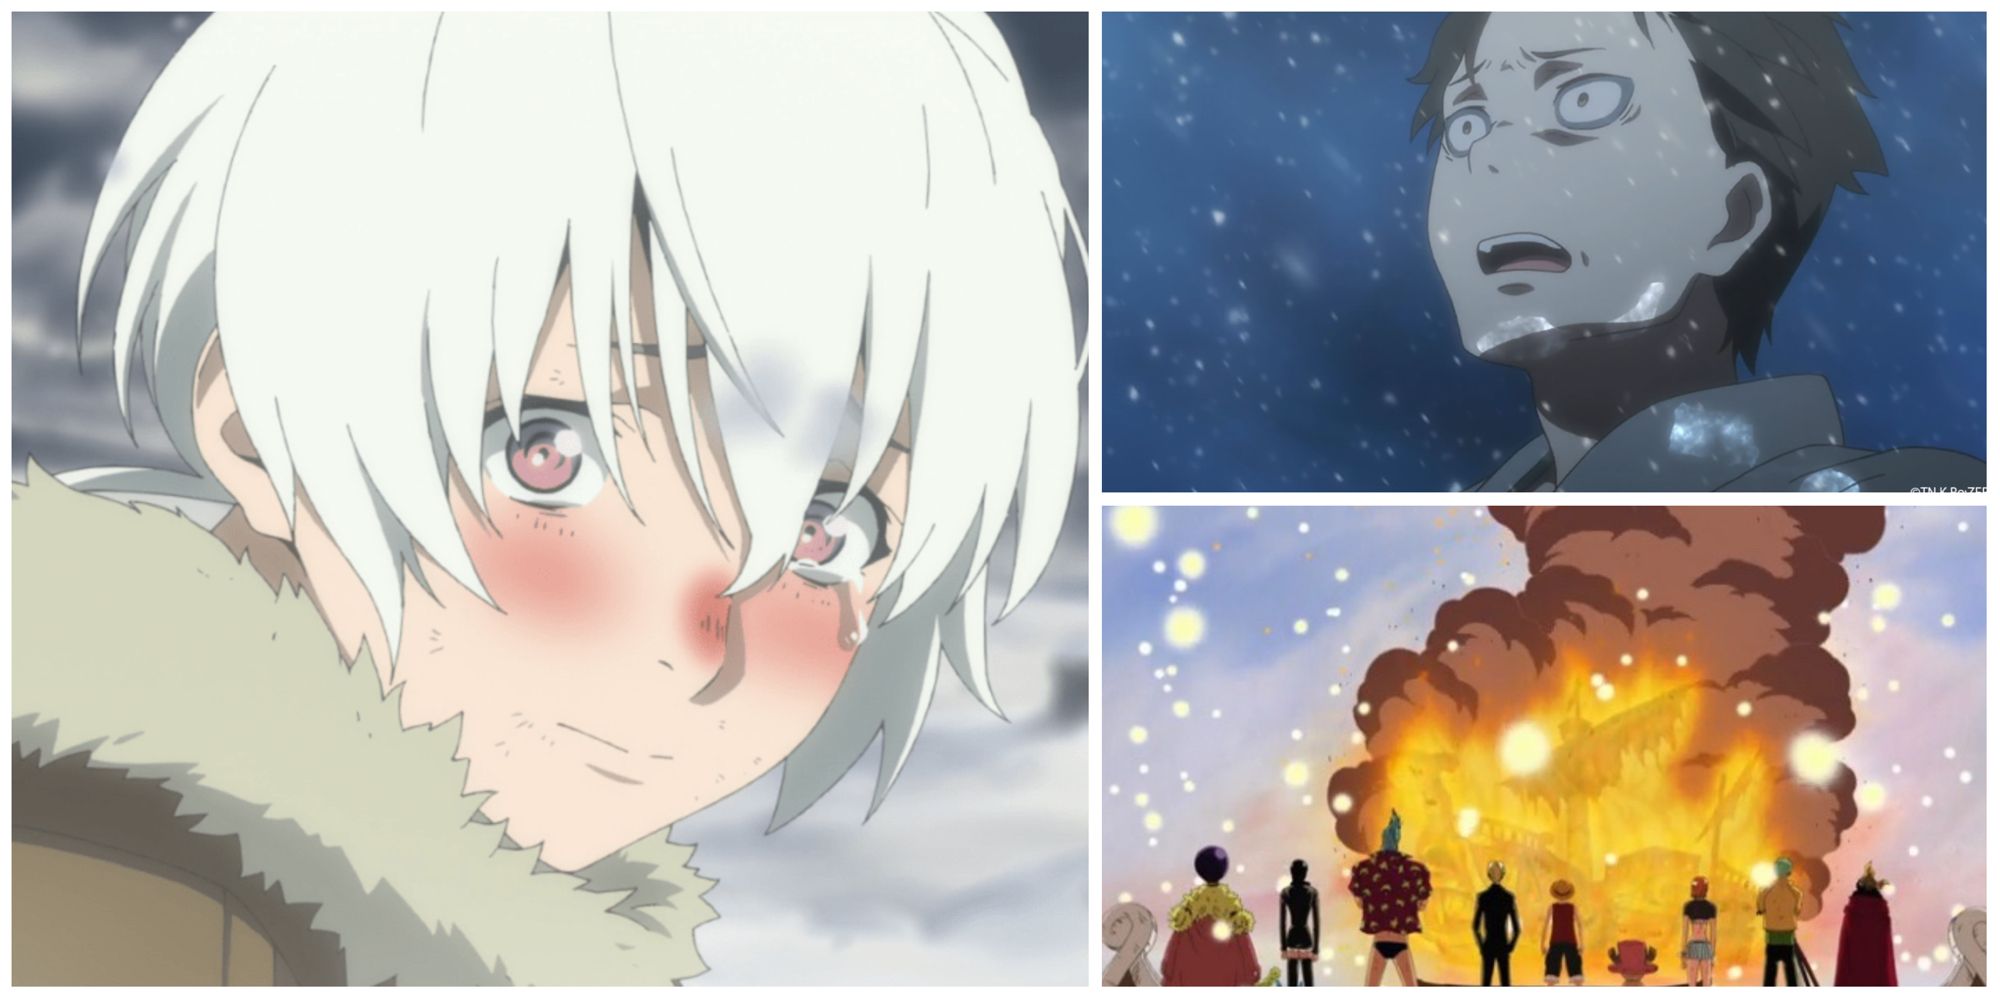 S N O W * : 네이버 블로그 | Anime snow, Anime scenery, Anime background